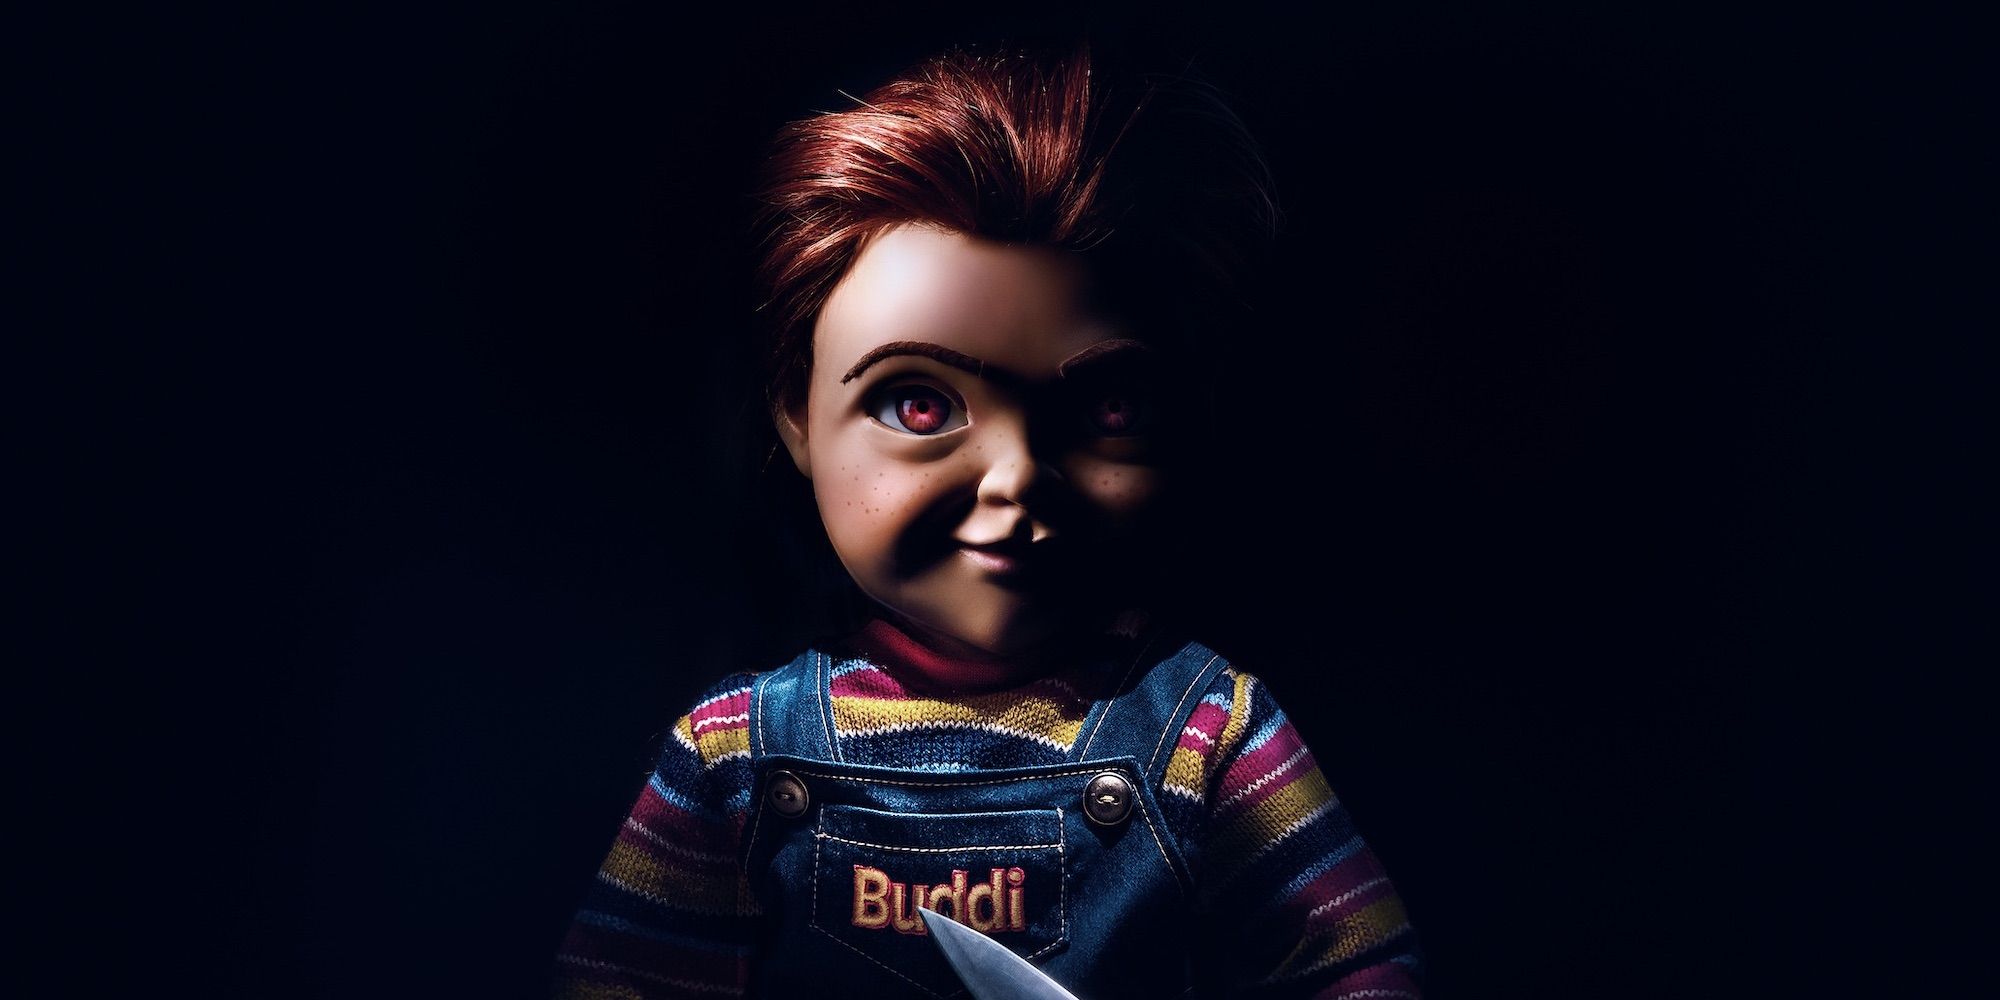 chucky buddi doll 2019